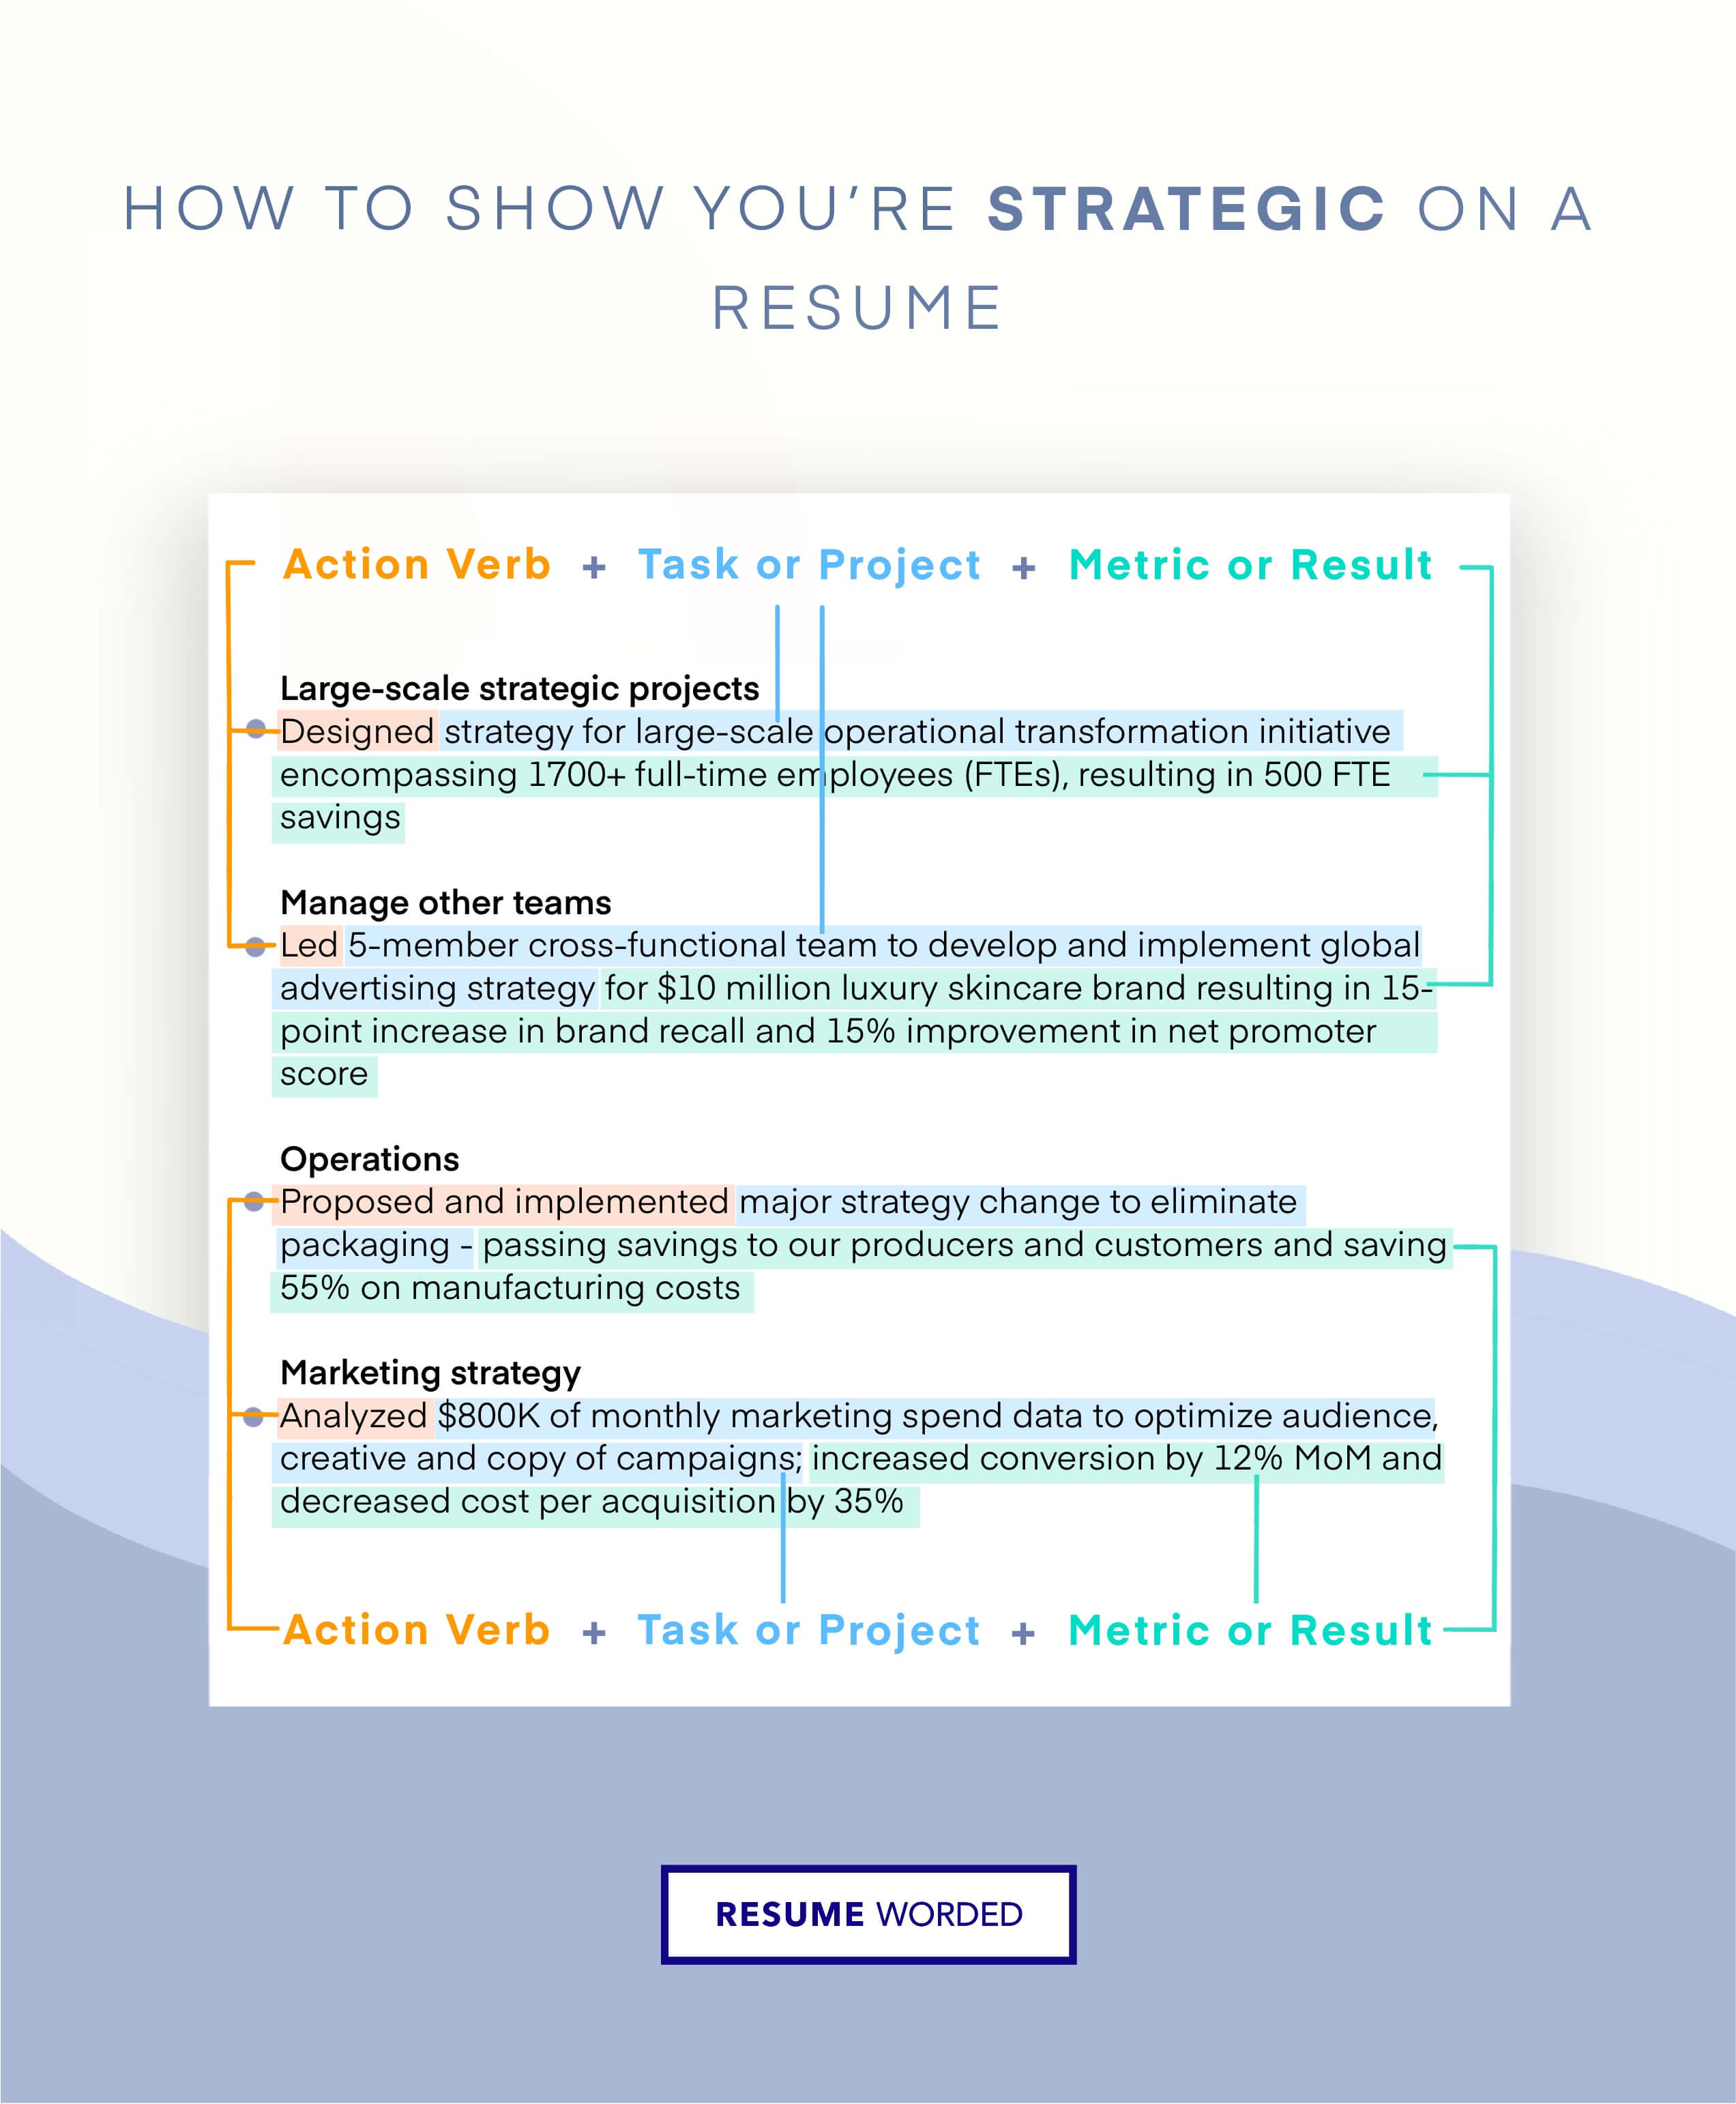 Highlight your strategic HR skills - Senior HR Manager & HR Director (Human Resources Director) Resume